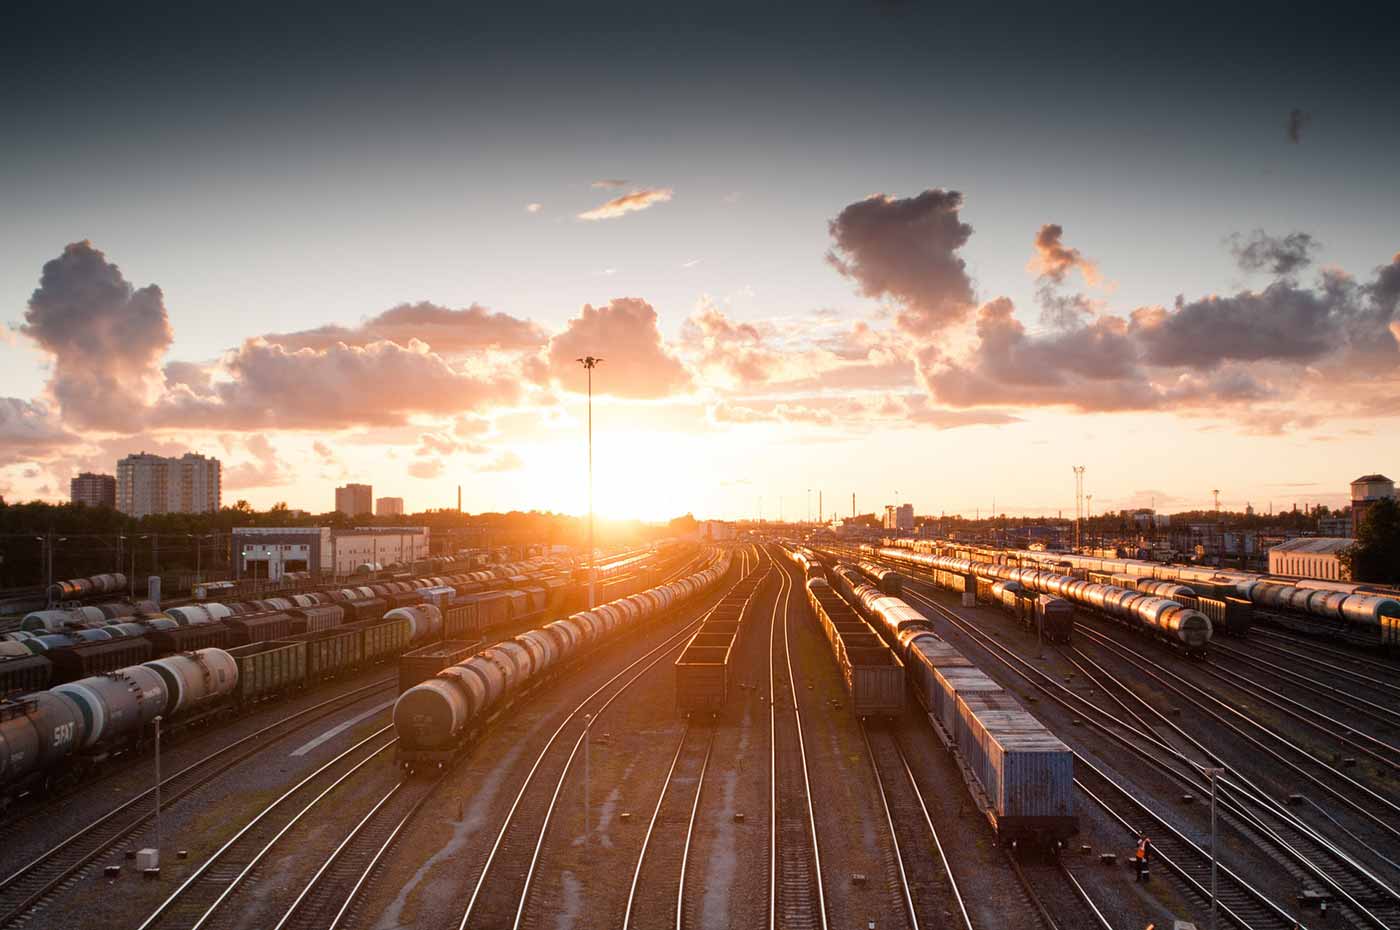 Sun over train tracks